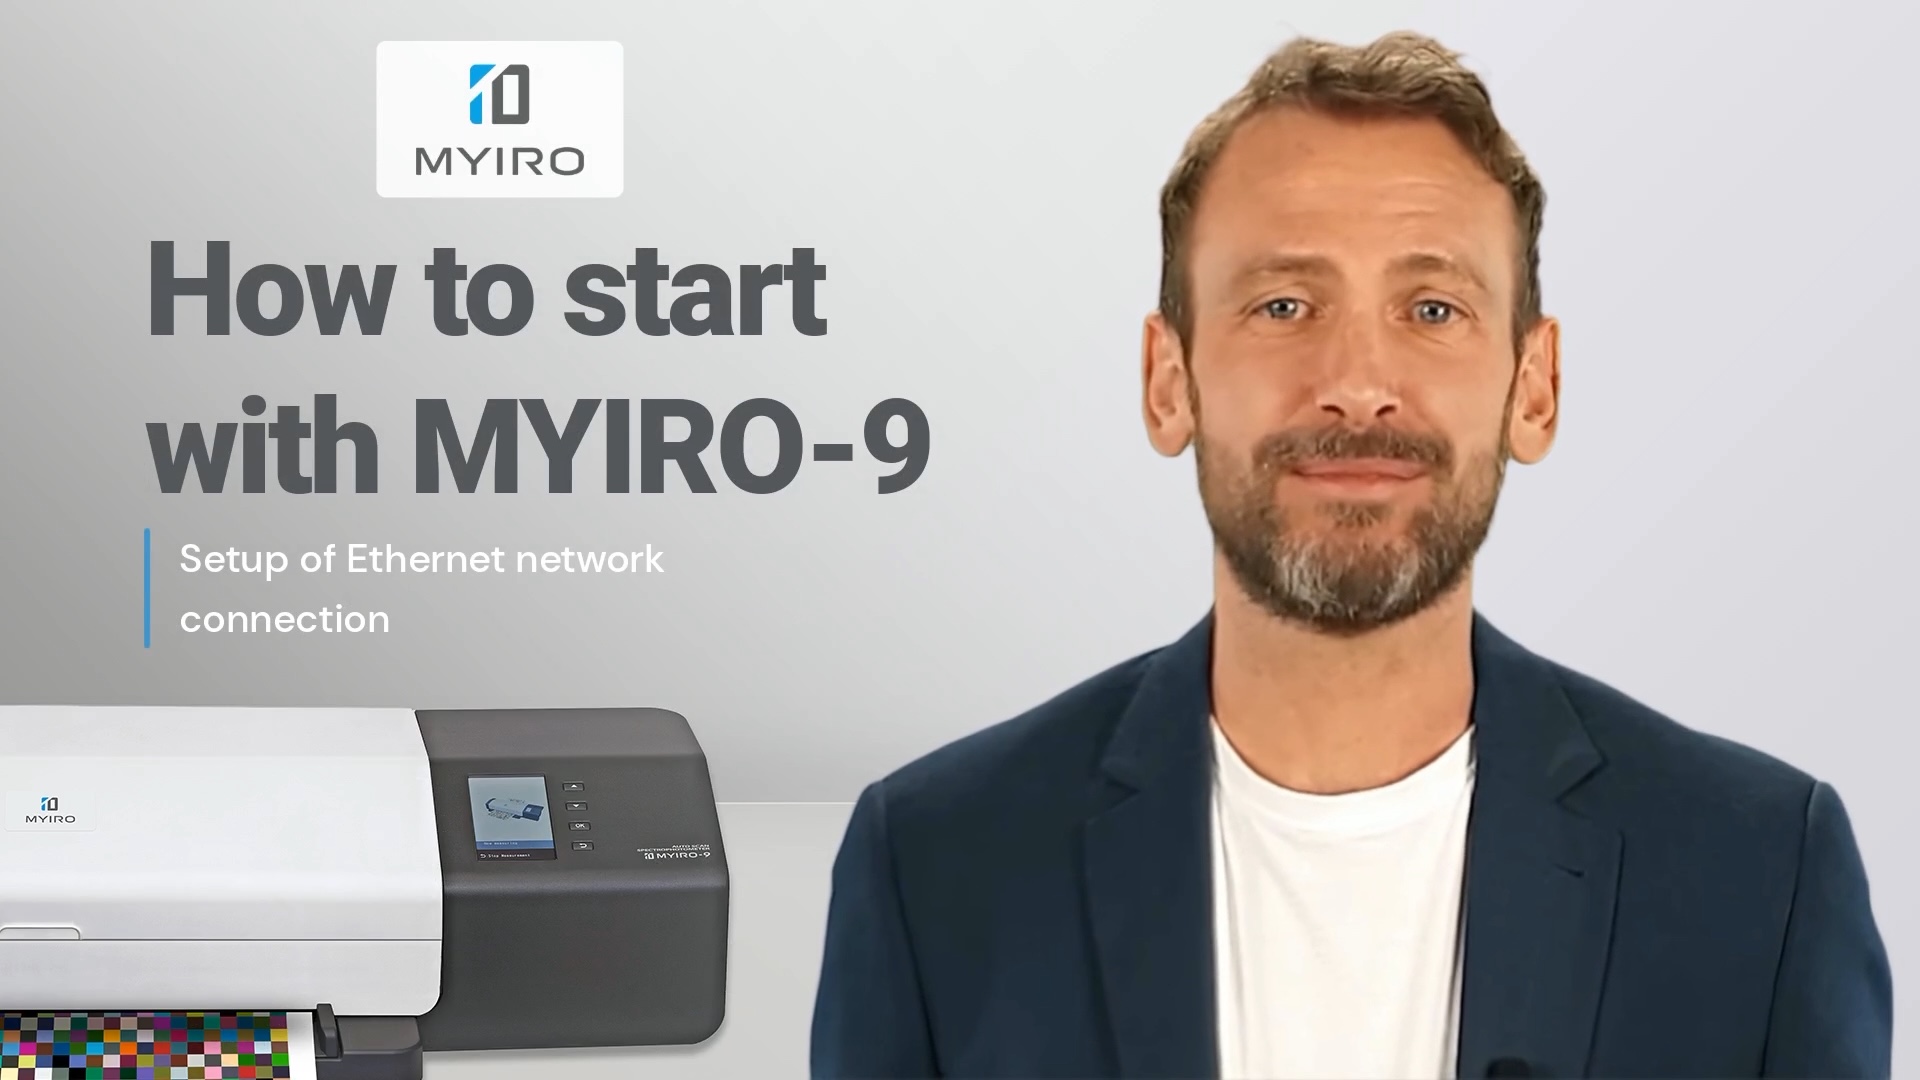 How to Start with MYIRO-9